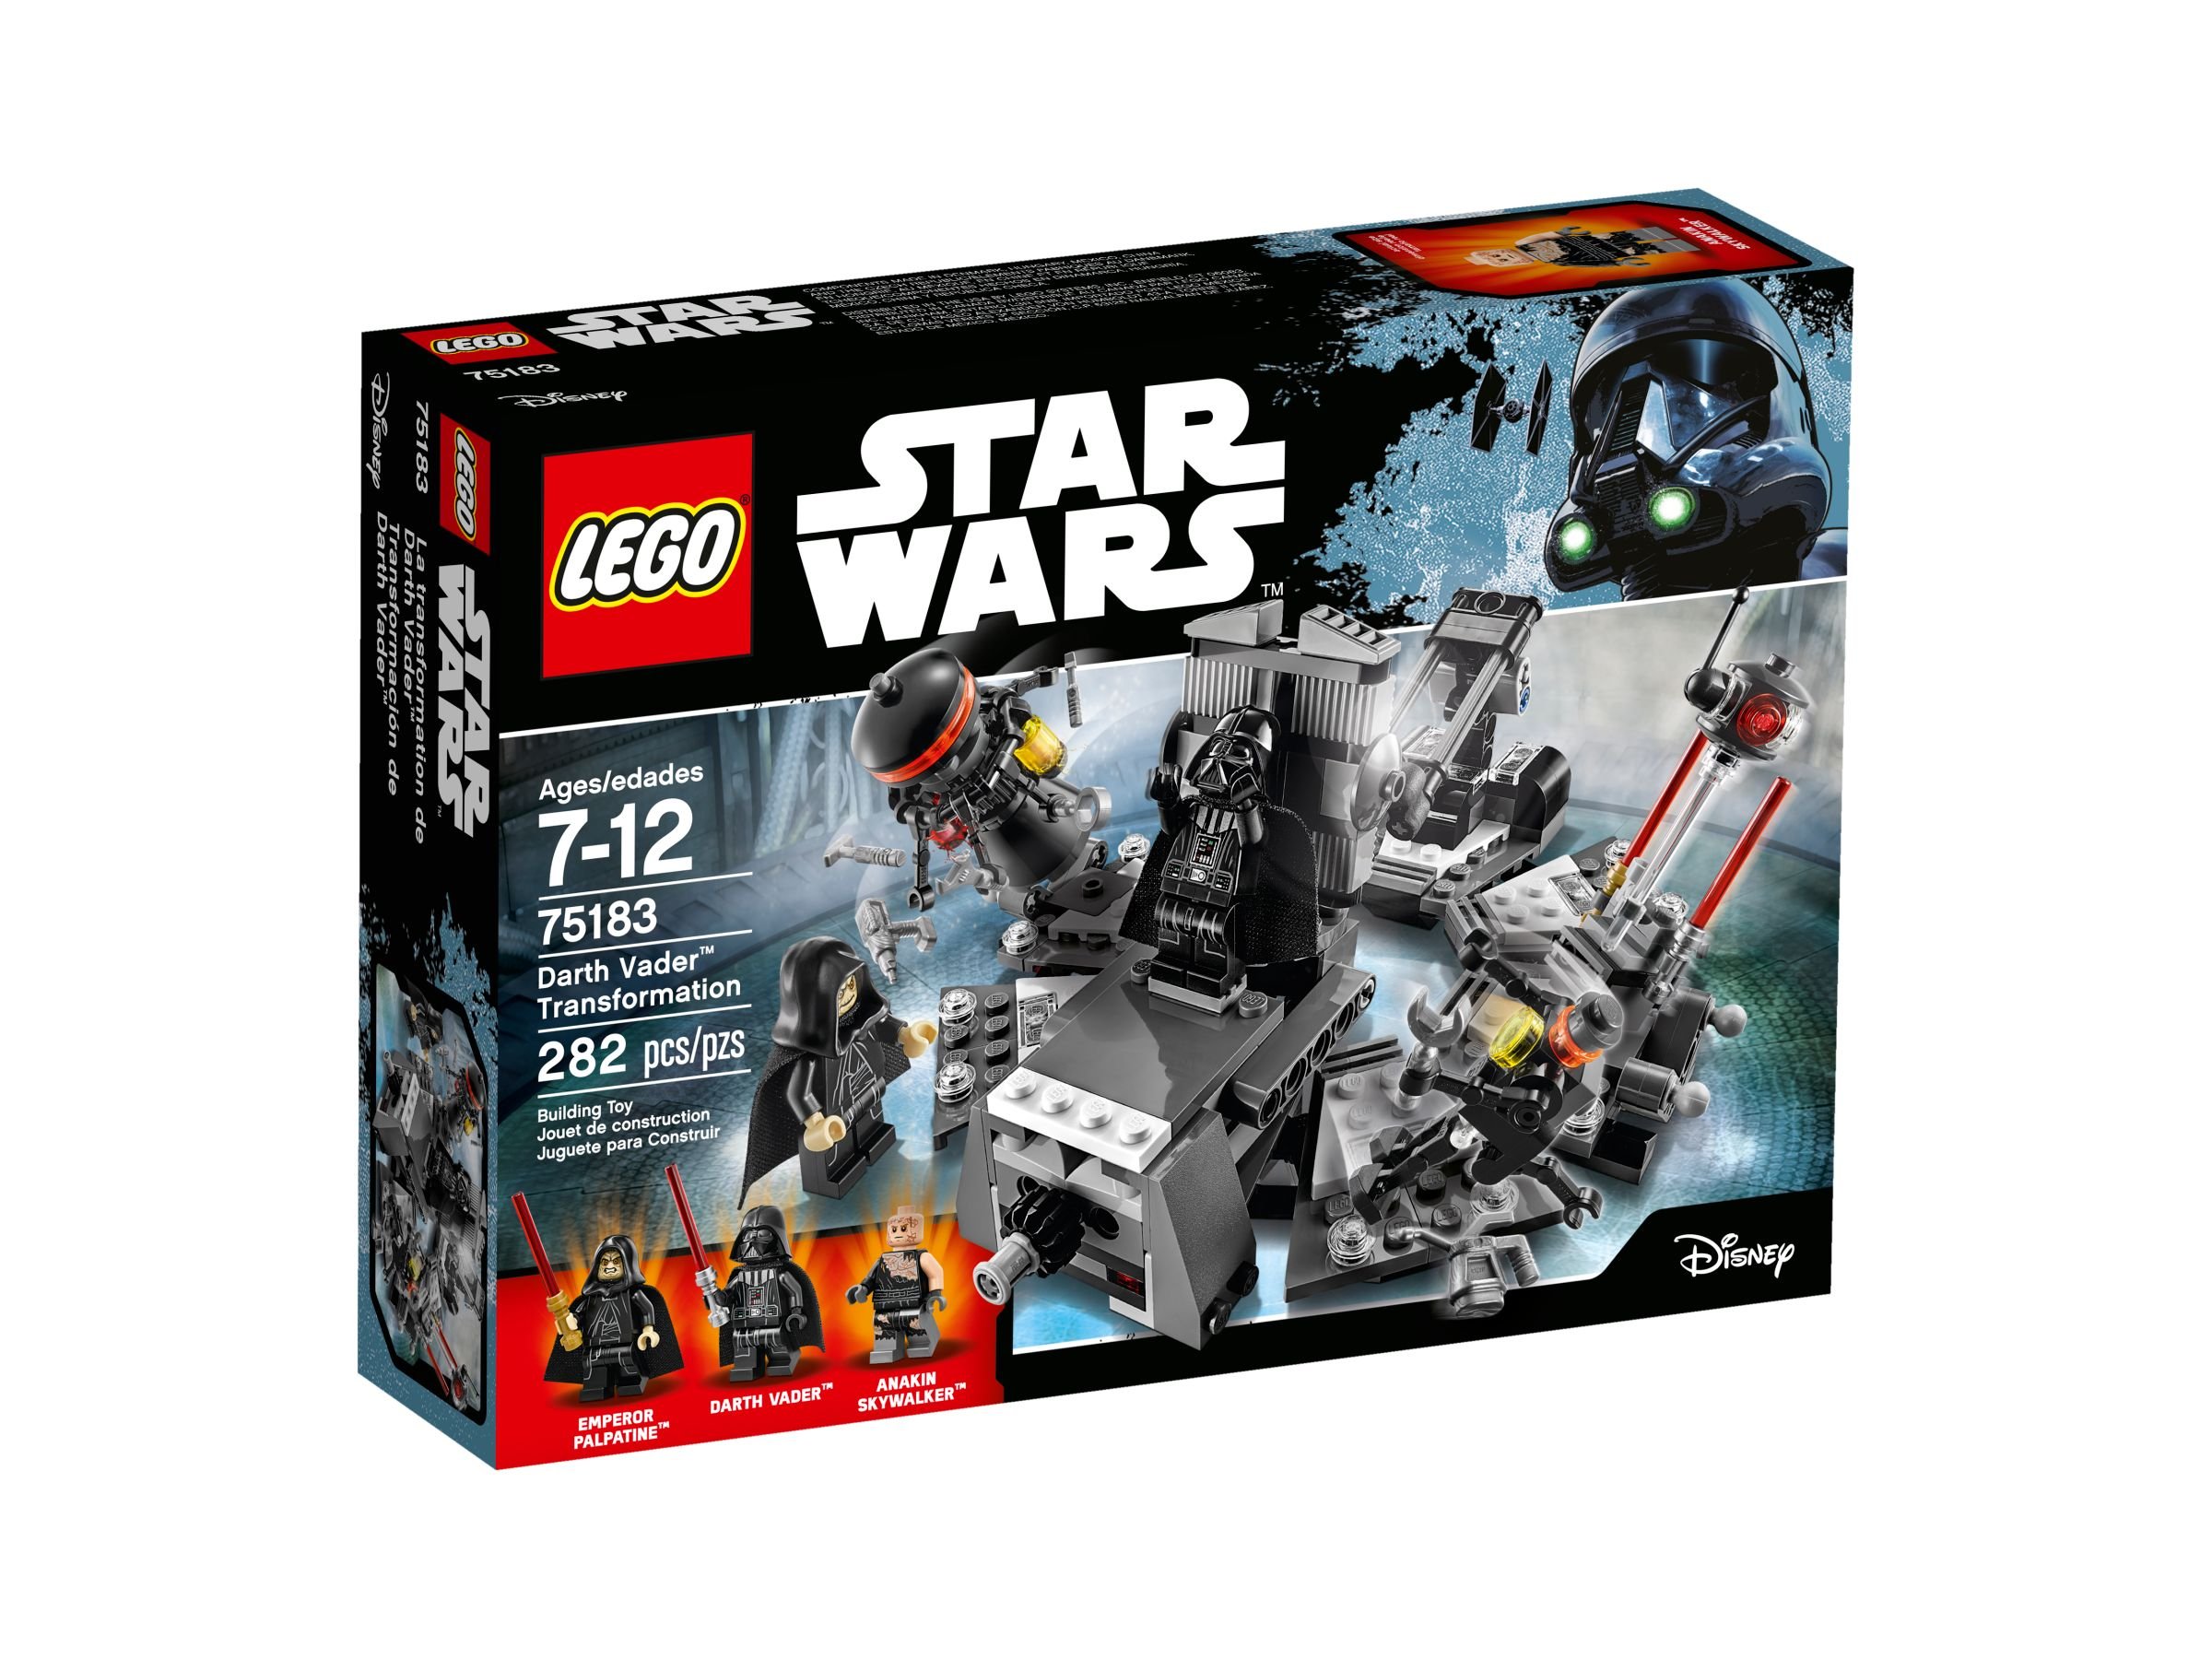 LEGO Star Wars 75183 Darth Vader™ Transformation LEGO_75183_alt1.jpg